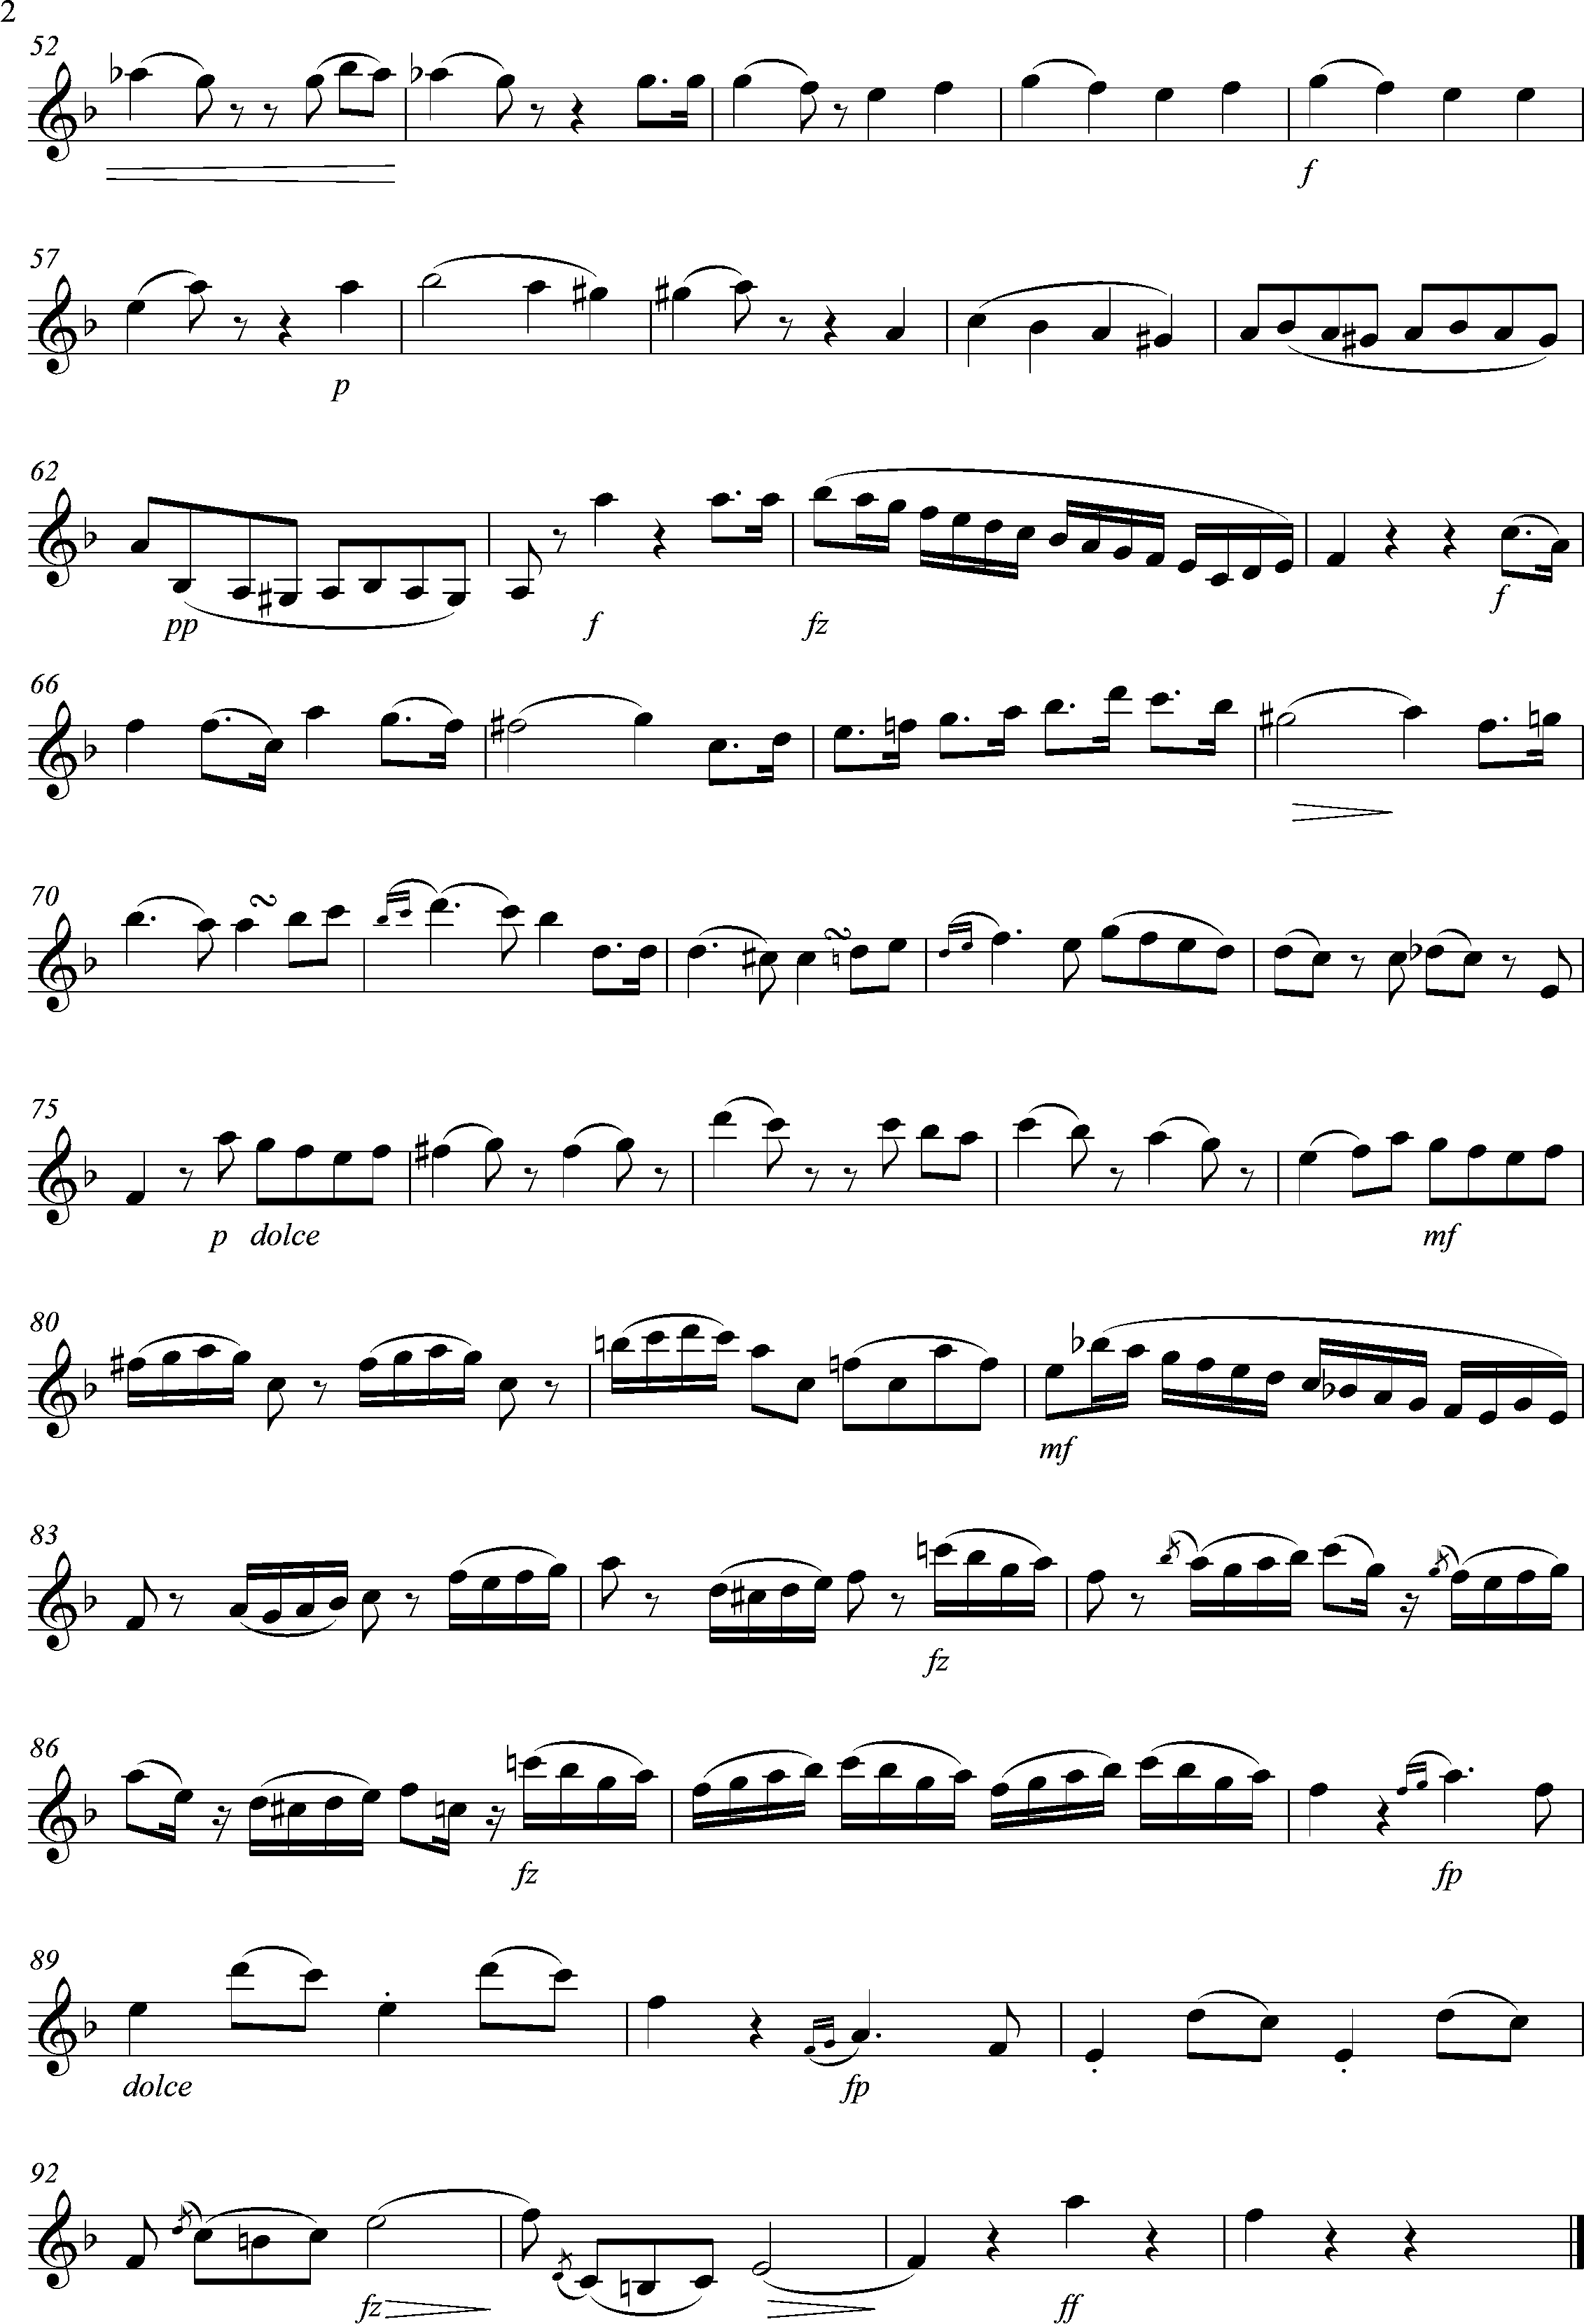 sonatine III,op151, Diabelli